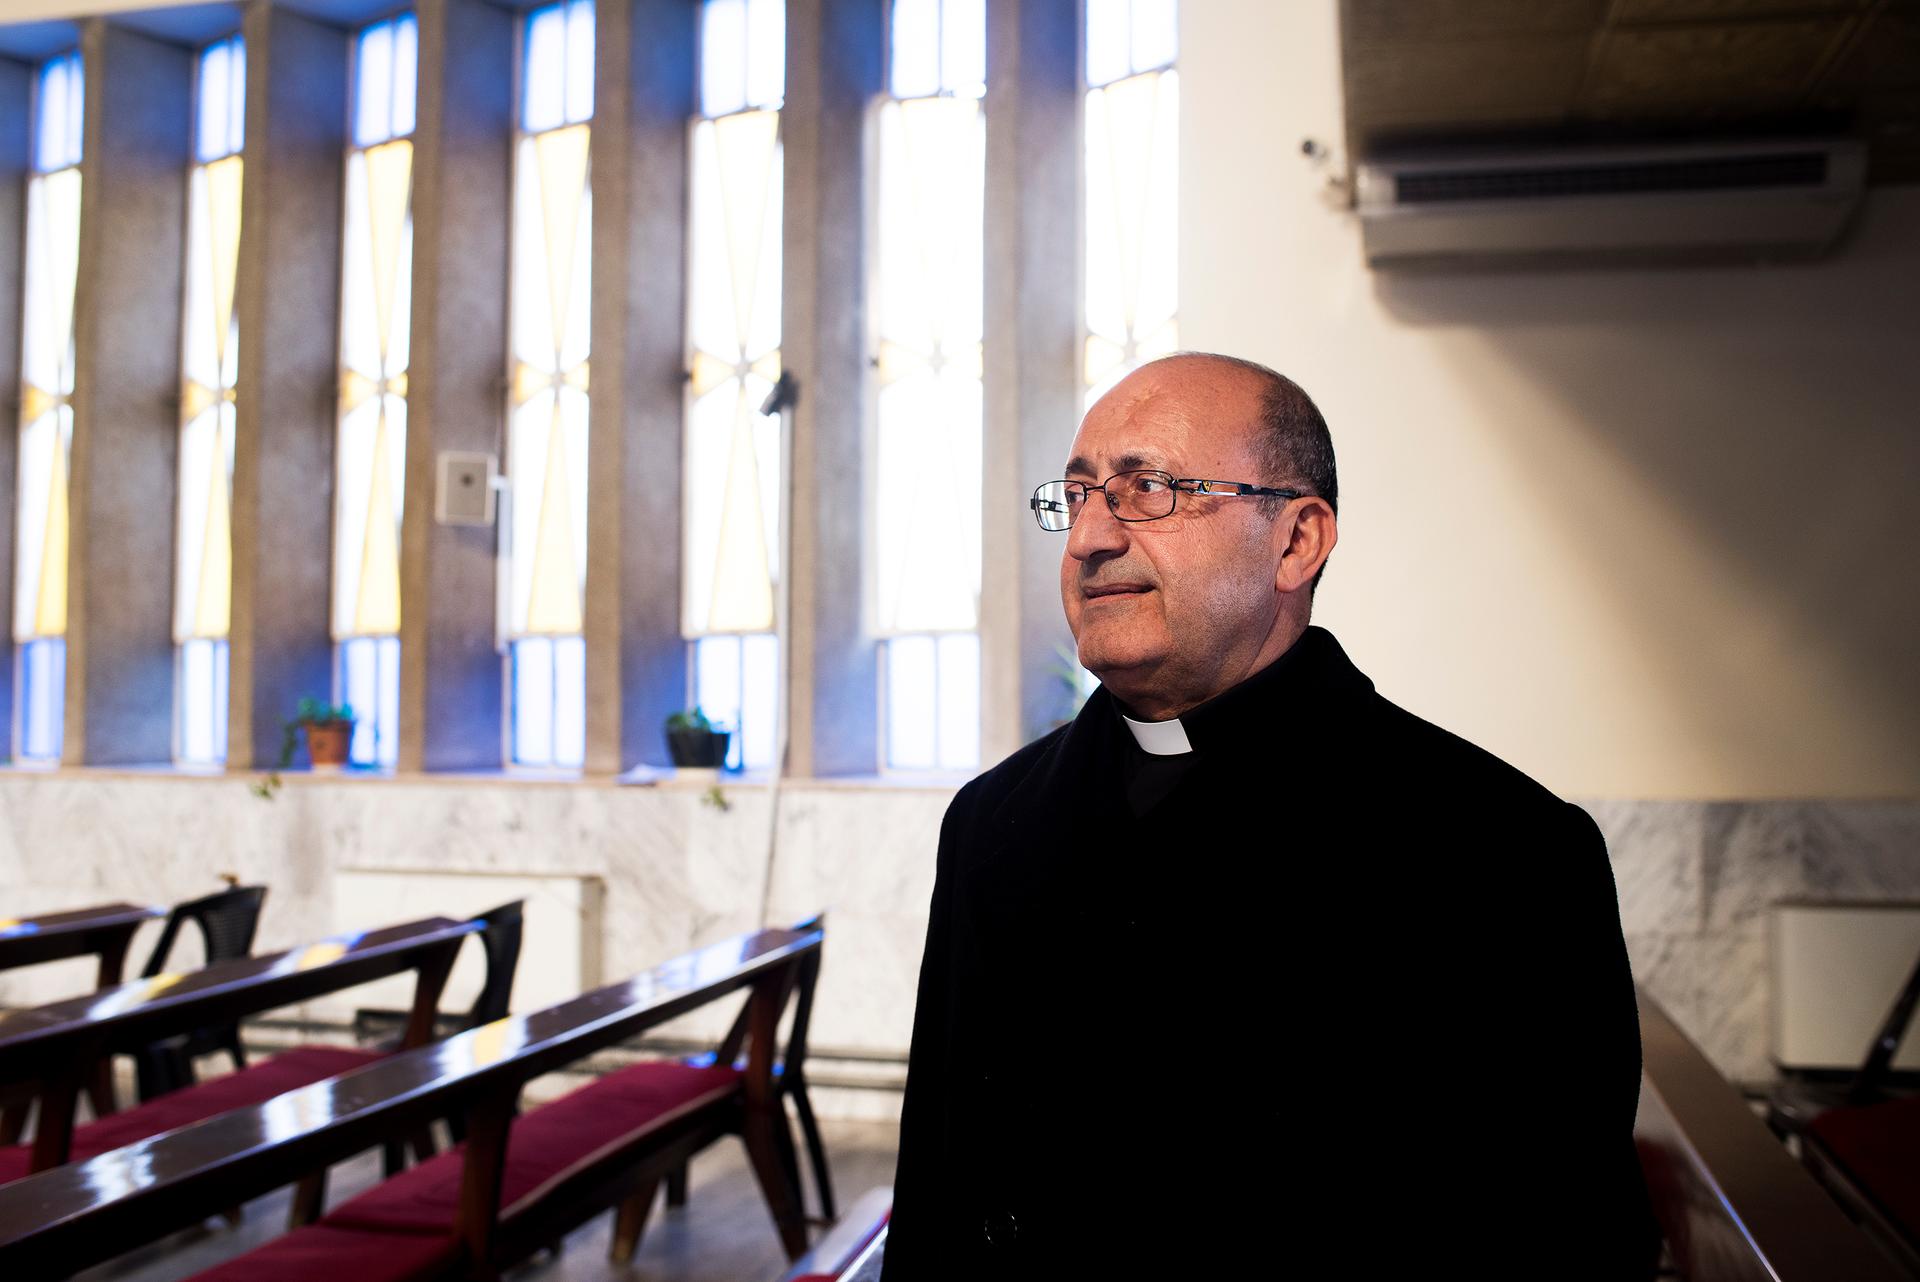 Father Khalil Jaar sits in St. Mary's church in Marka, 15 minutes outside of Amman, Jordan.